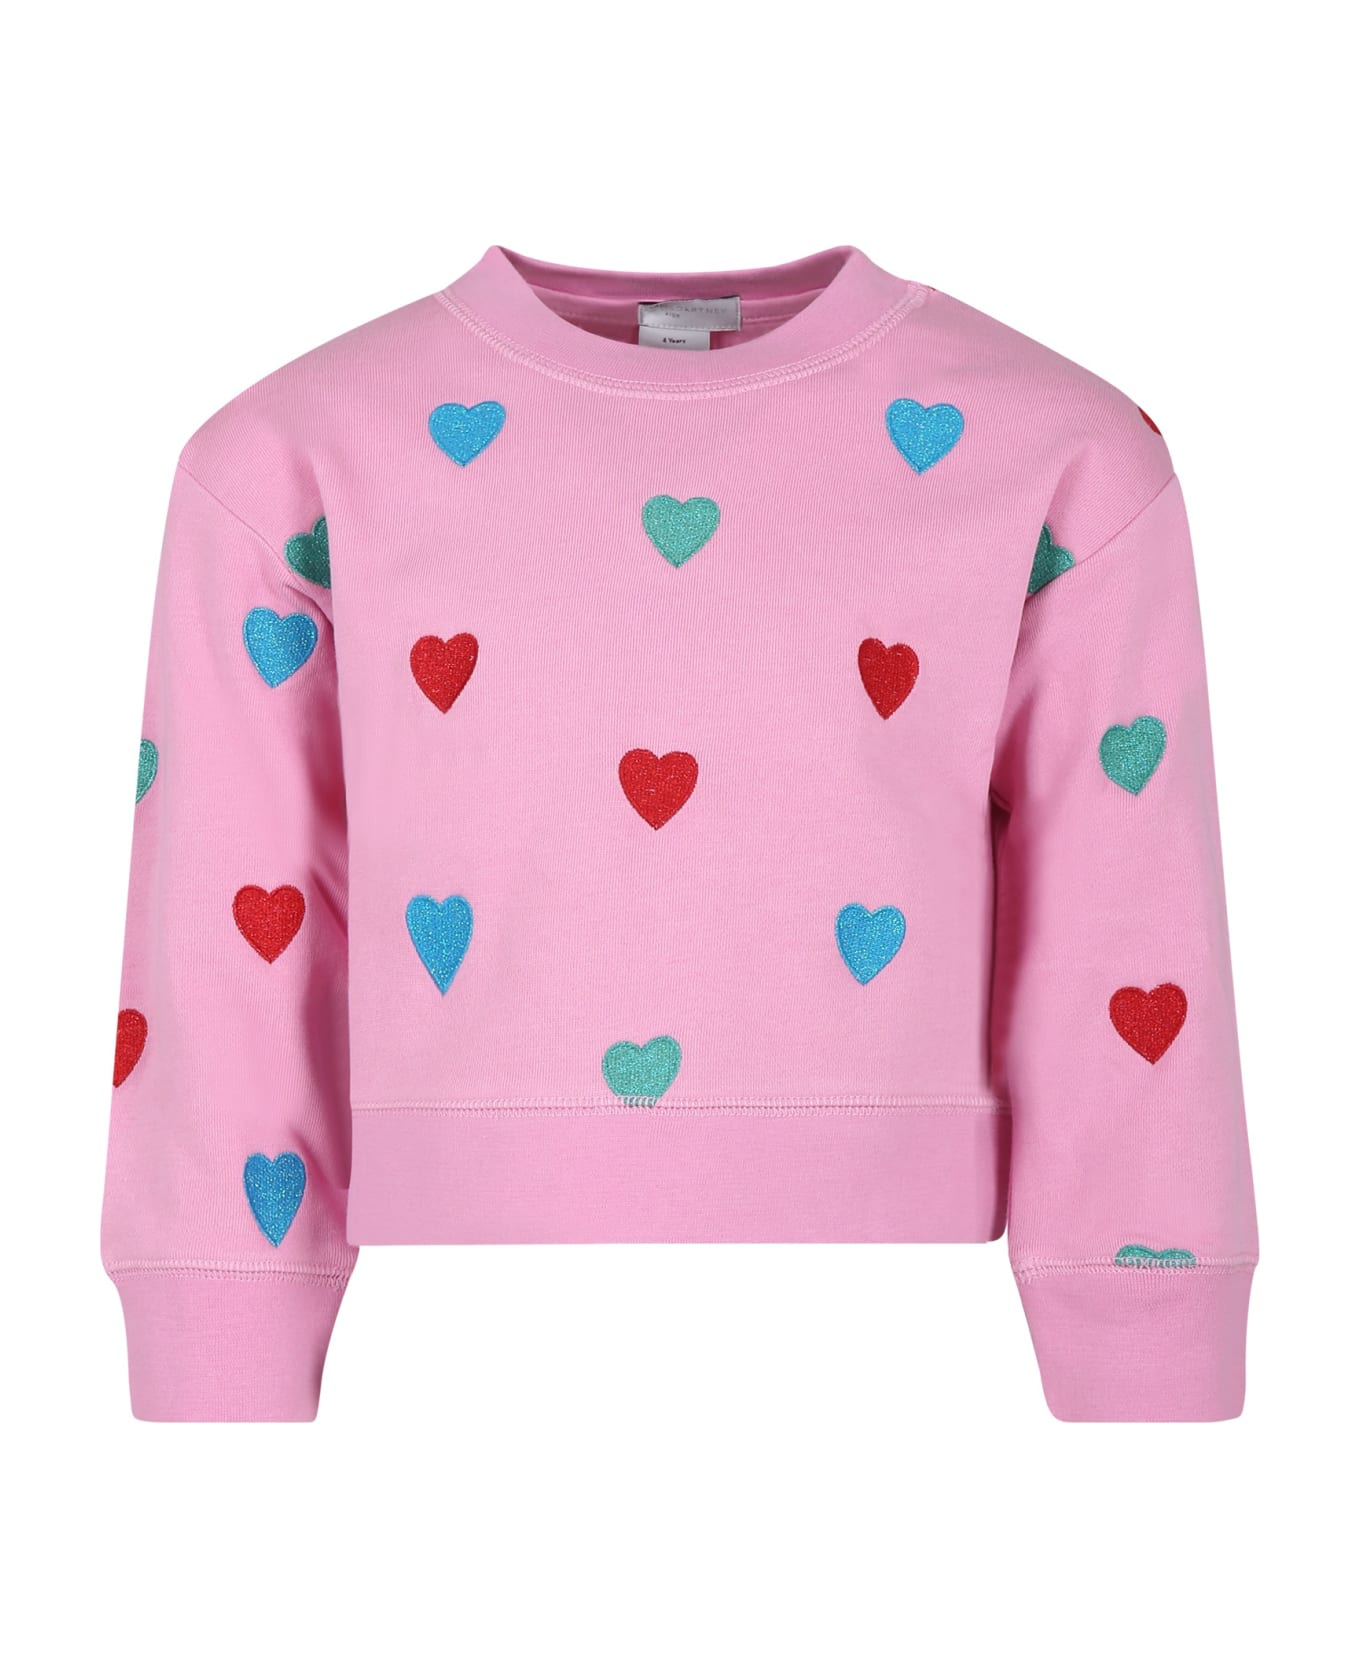 Stella McCartney Kids Pink Sweatshirt For Girl With Hearts - Pink